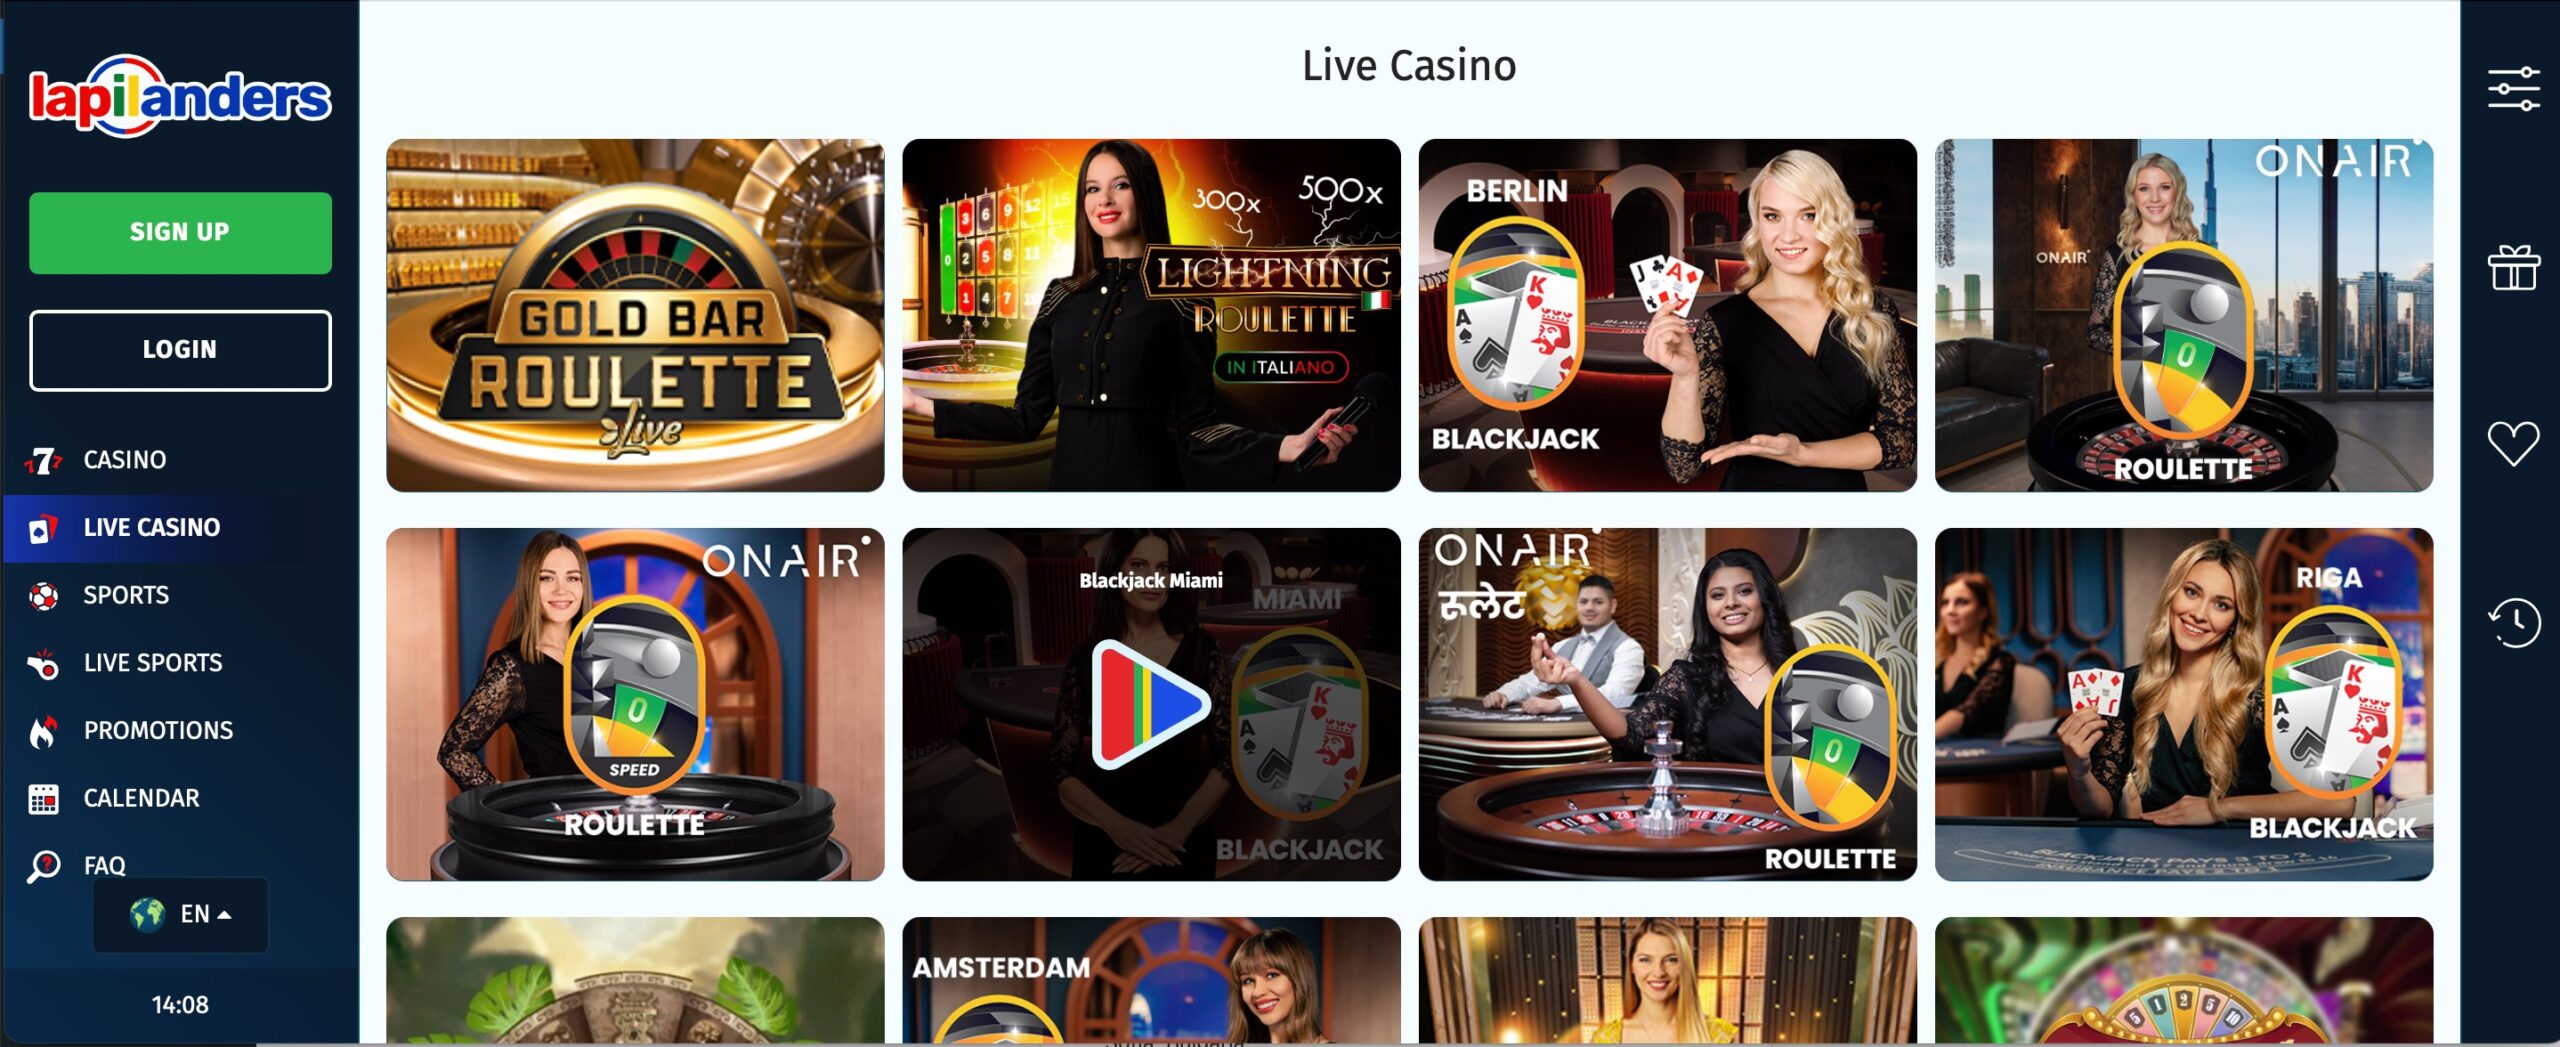 Lapilanders Casino Live Games